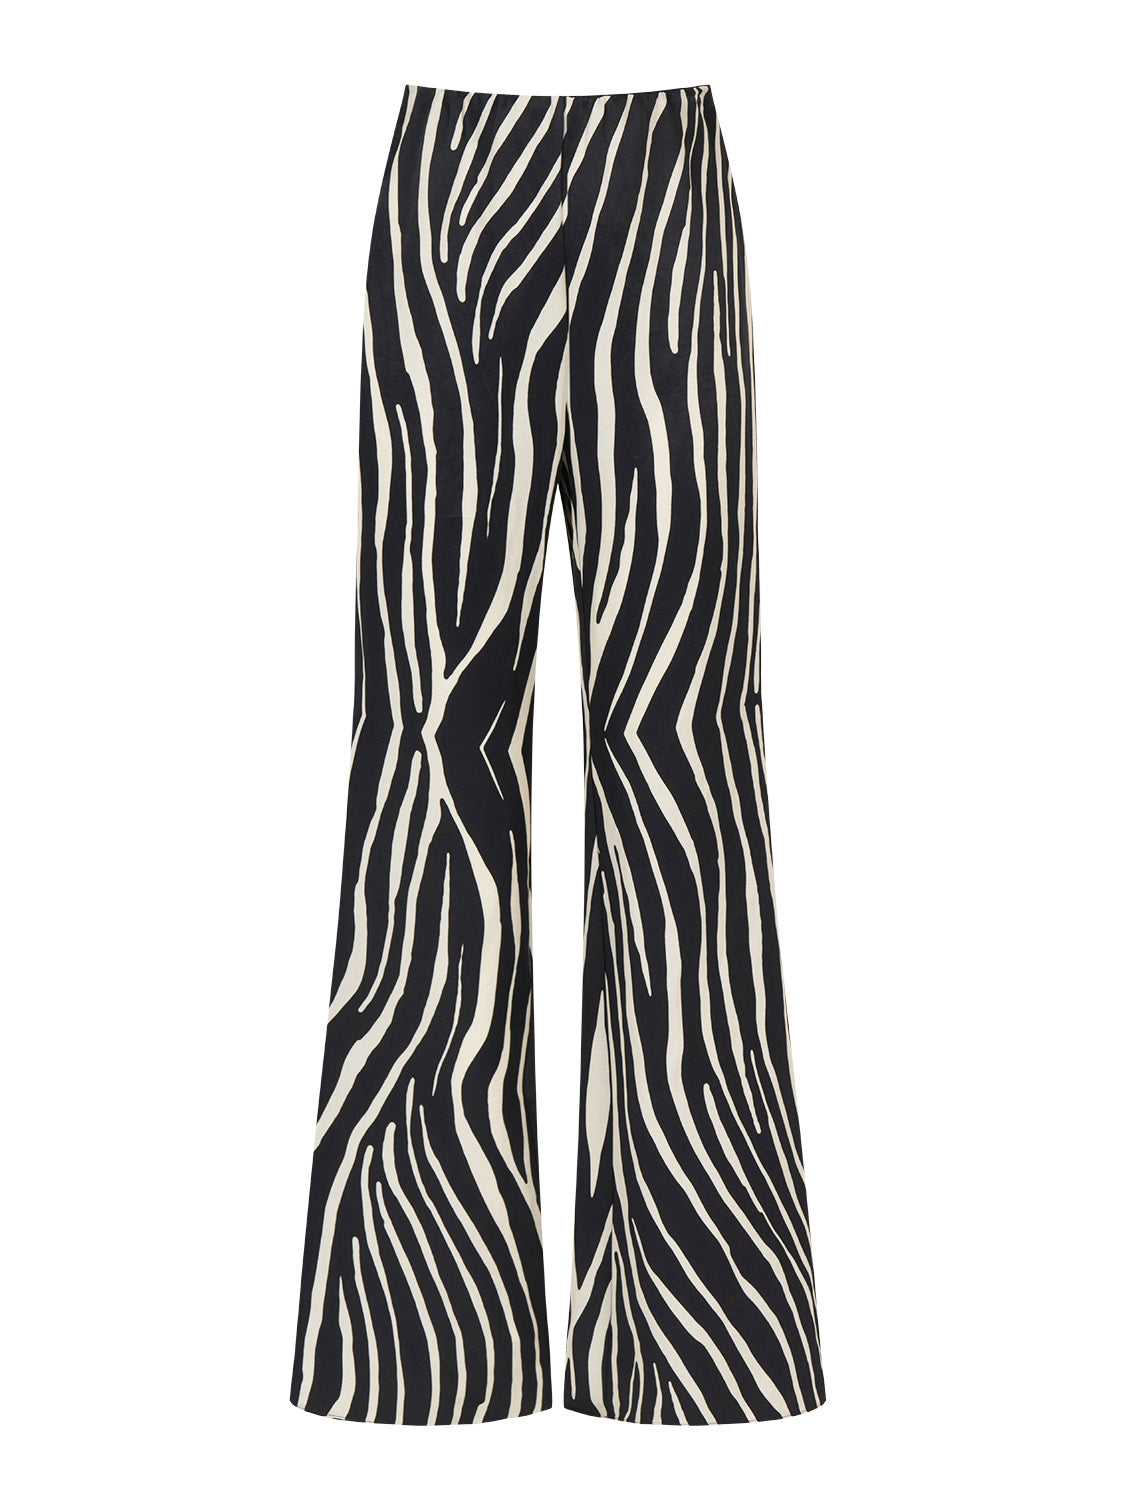 Zebra pants